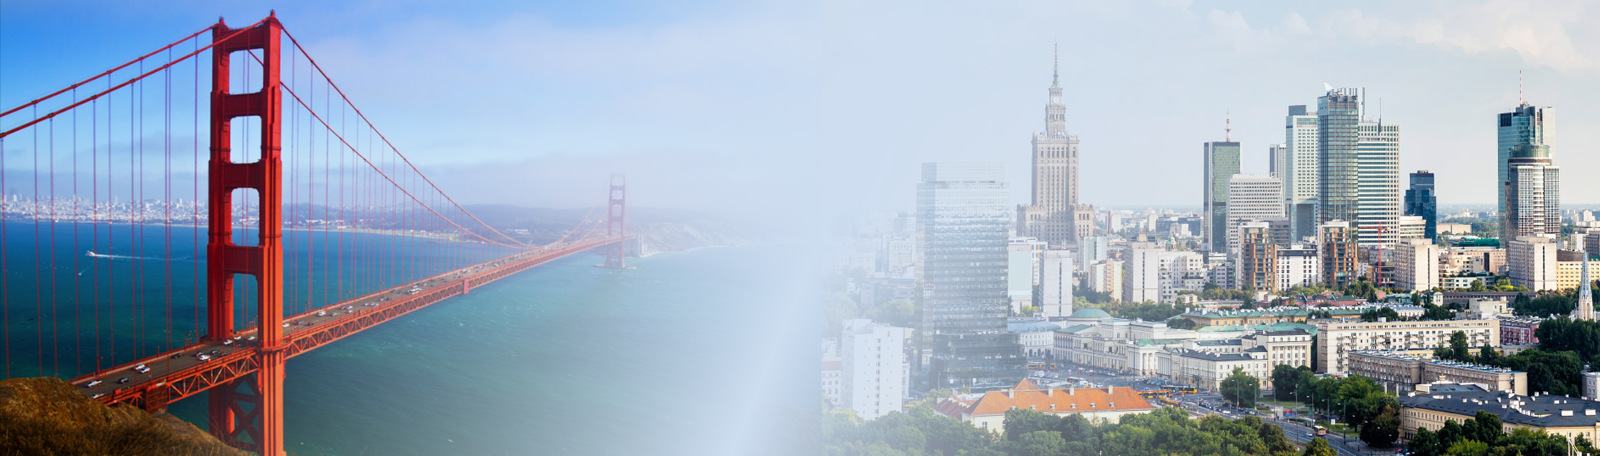 „Jak z San Francisco, a nawet lepiej” by Jakub Kubryński